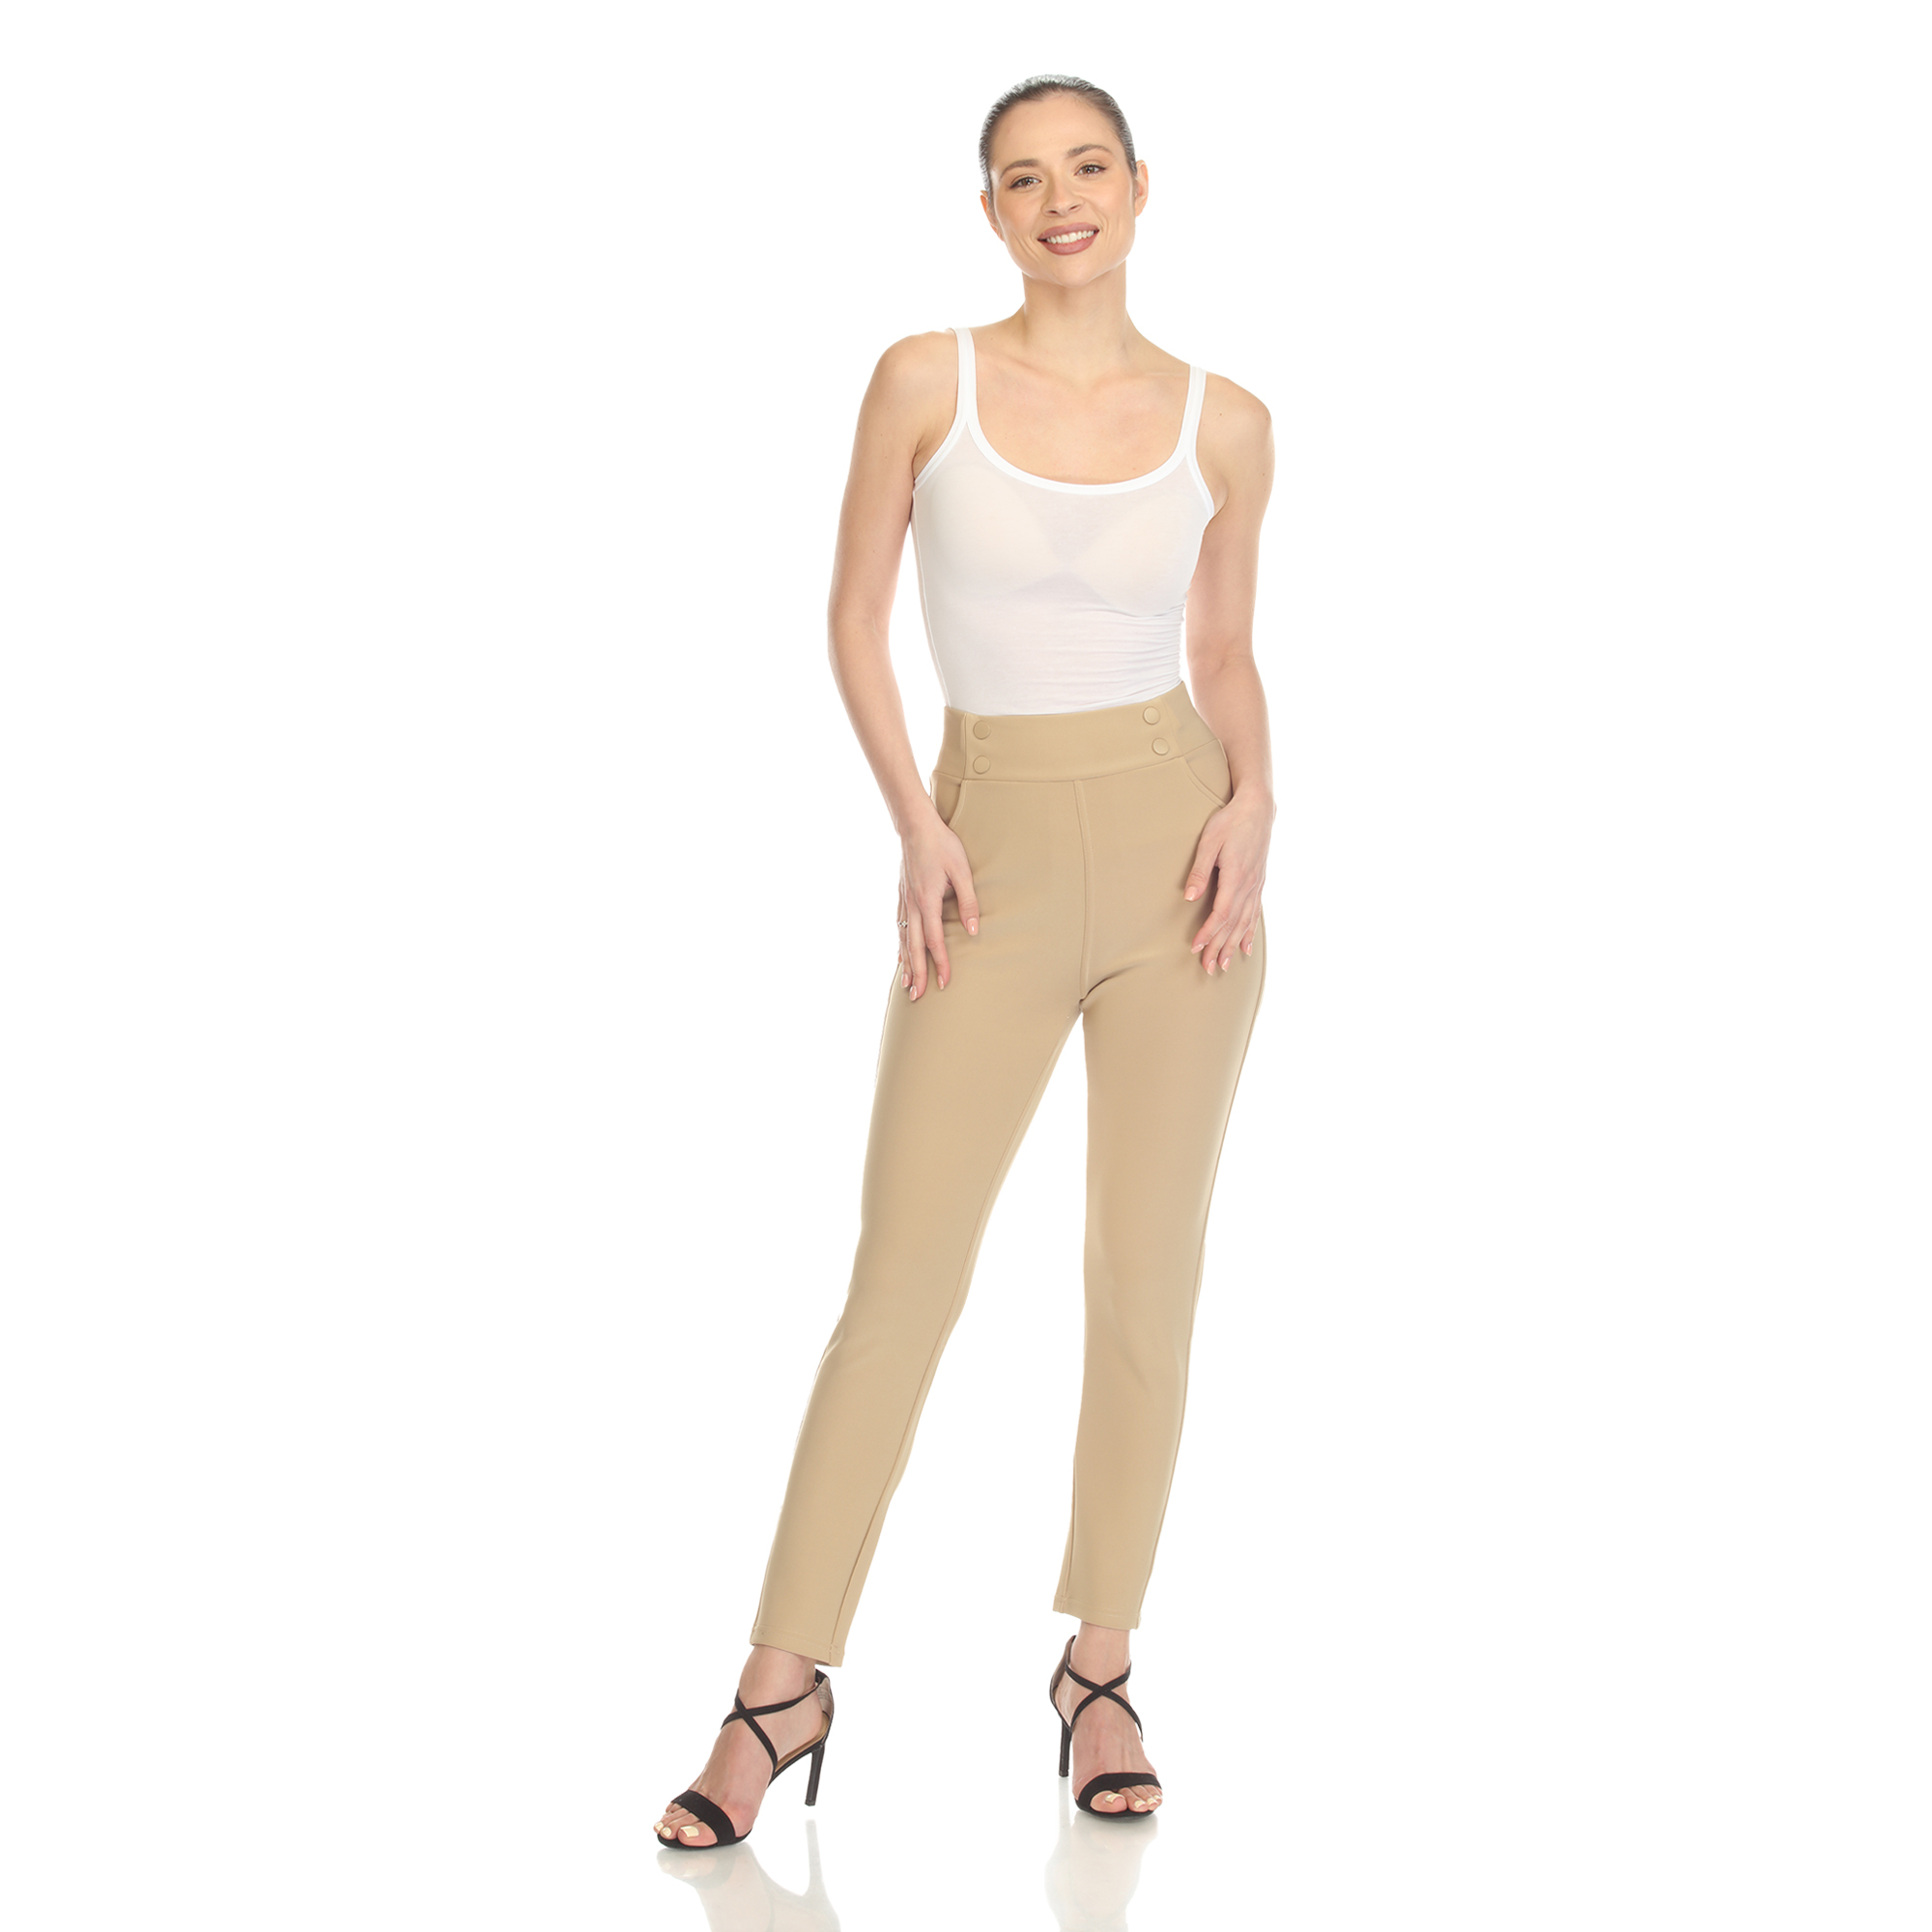 White Mark Women's Super Soft Elastic Waistband High Waist Scuba Pants With Pockets - Beige, 3X